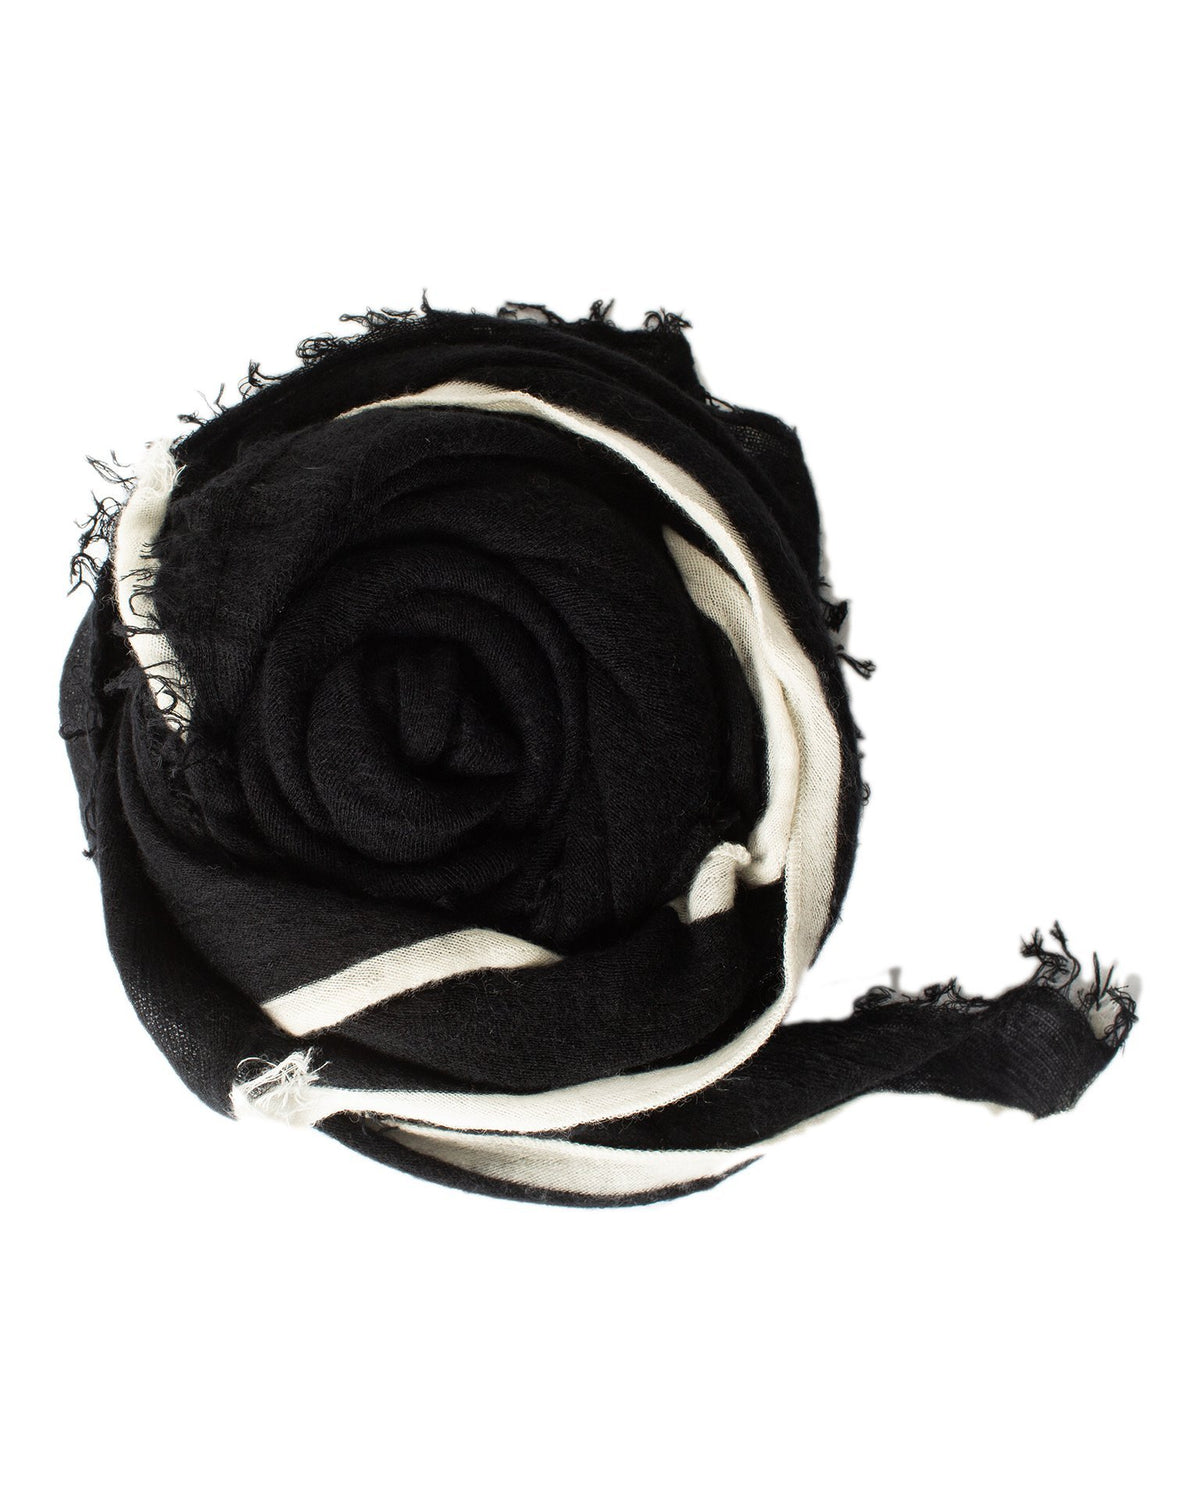 Grisal Accessories Black x Milk Rosa Cashmere Scarf in Black x Milk